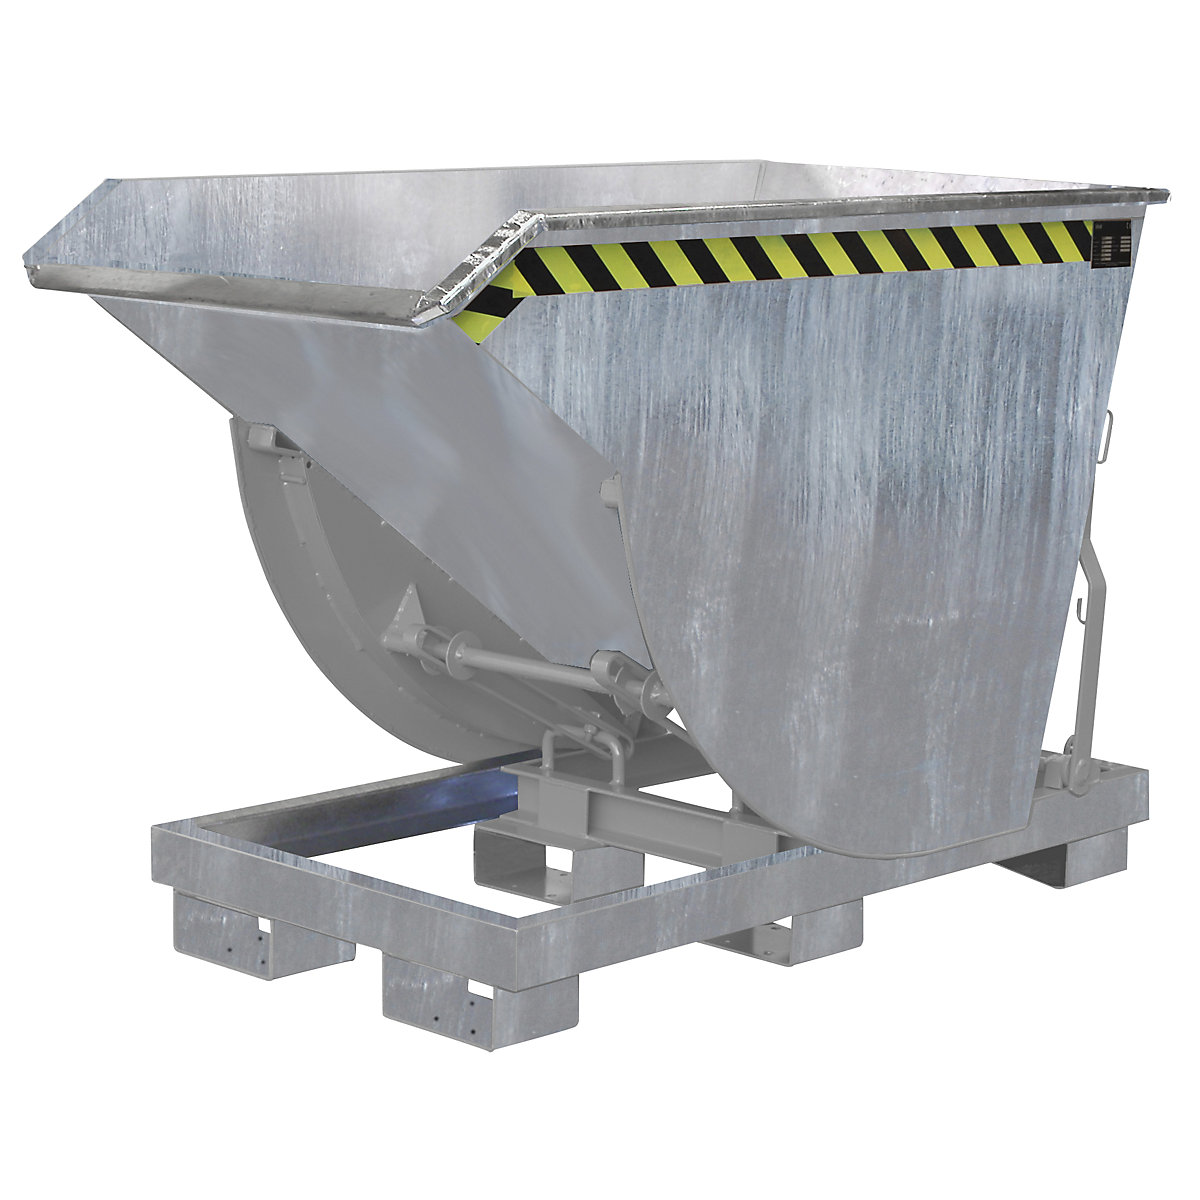 Tilting skip, narrow version – eurokraft pro, capacity 0.5 m³, max. load 2500 kg, hot dip galvanised in accordance with EN ISO 1461-11